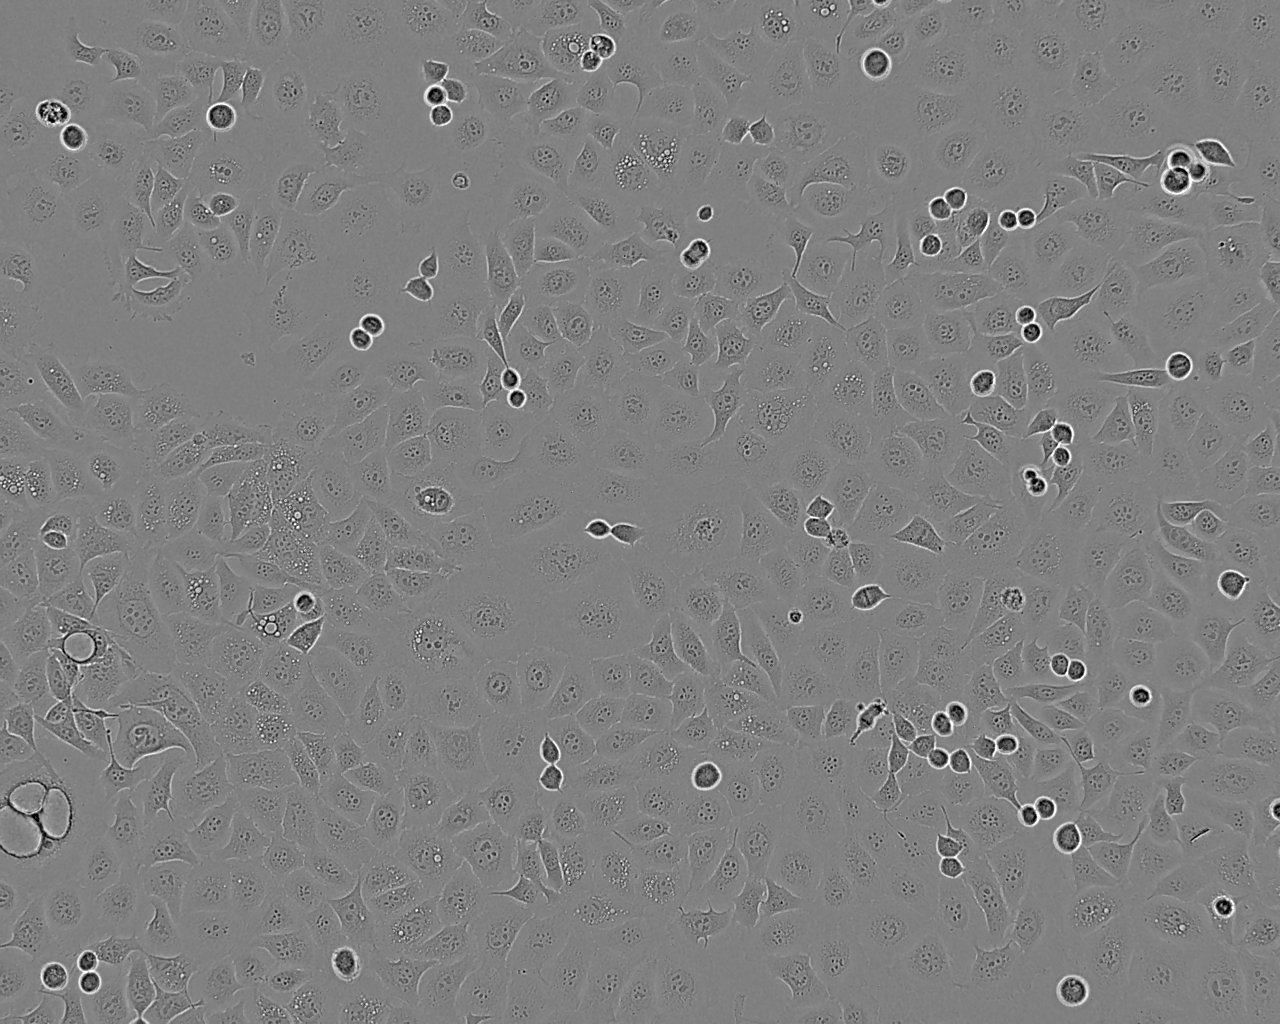 SV40 MES 13 Cells|小鼠肾小球系膜可传代细胞系,SV40 MES 13 Cells